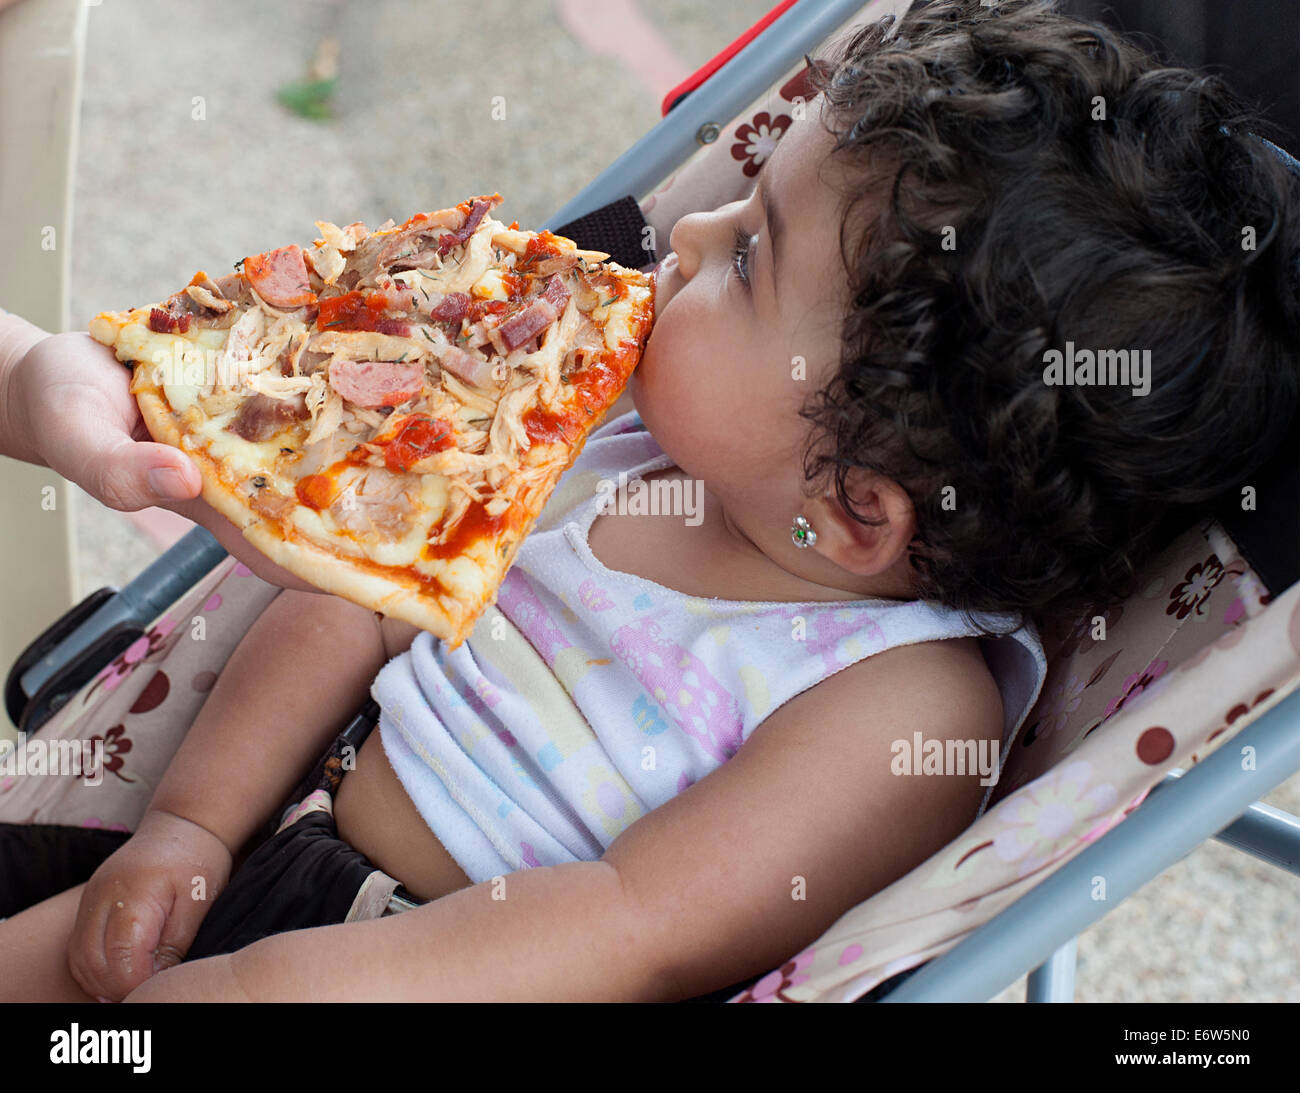 Lady ernährt Stück Pizza auf einjährige Mädchen im Kinderwagen. Bogota Kolumbien. Stockfoto